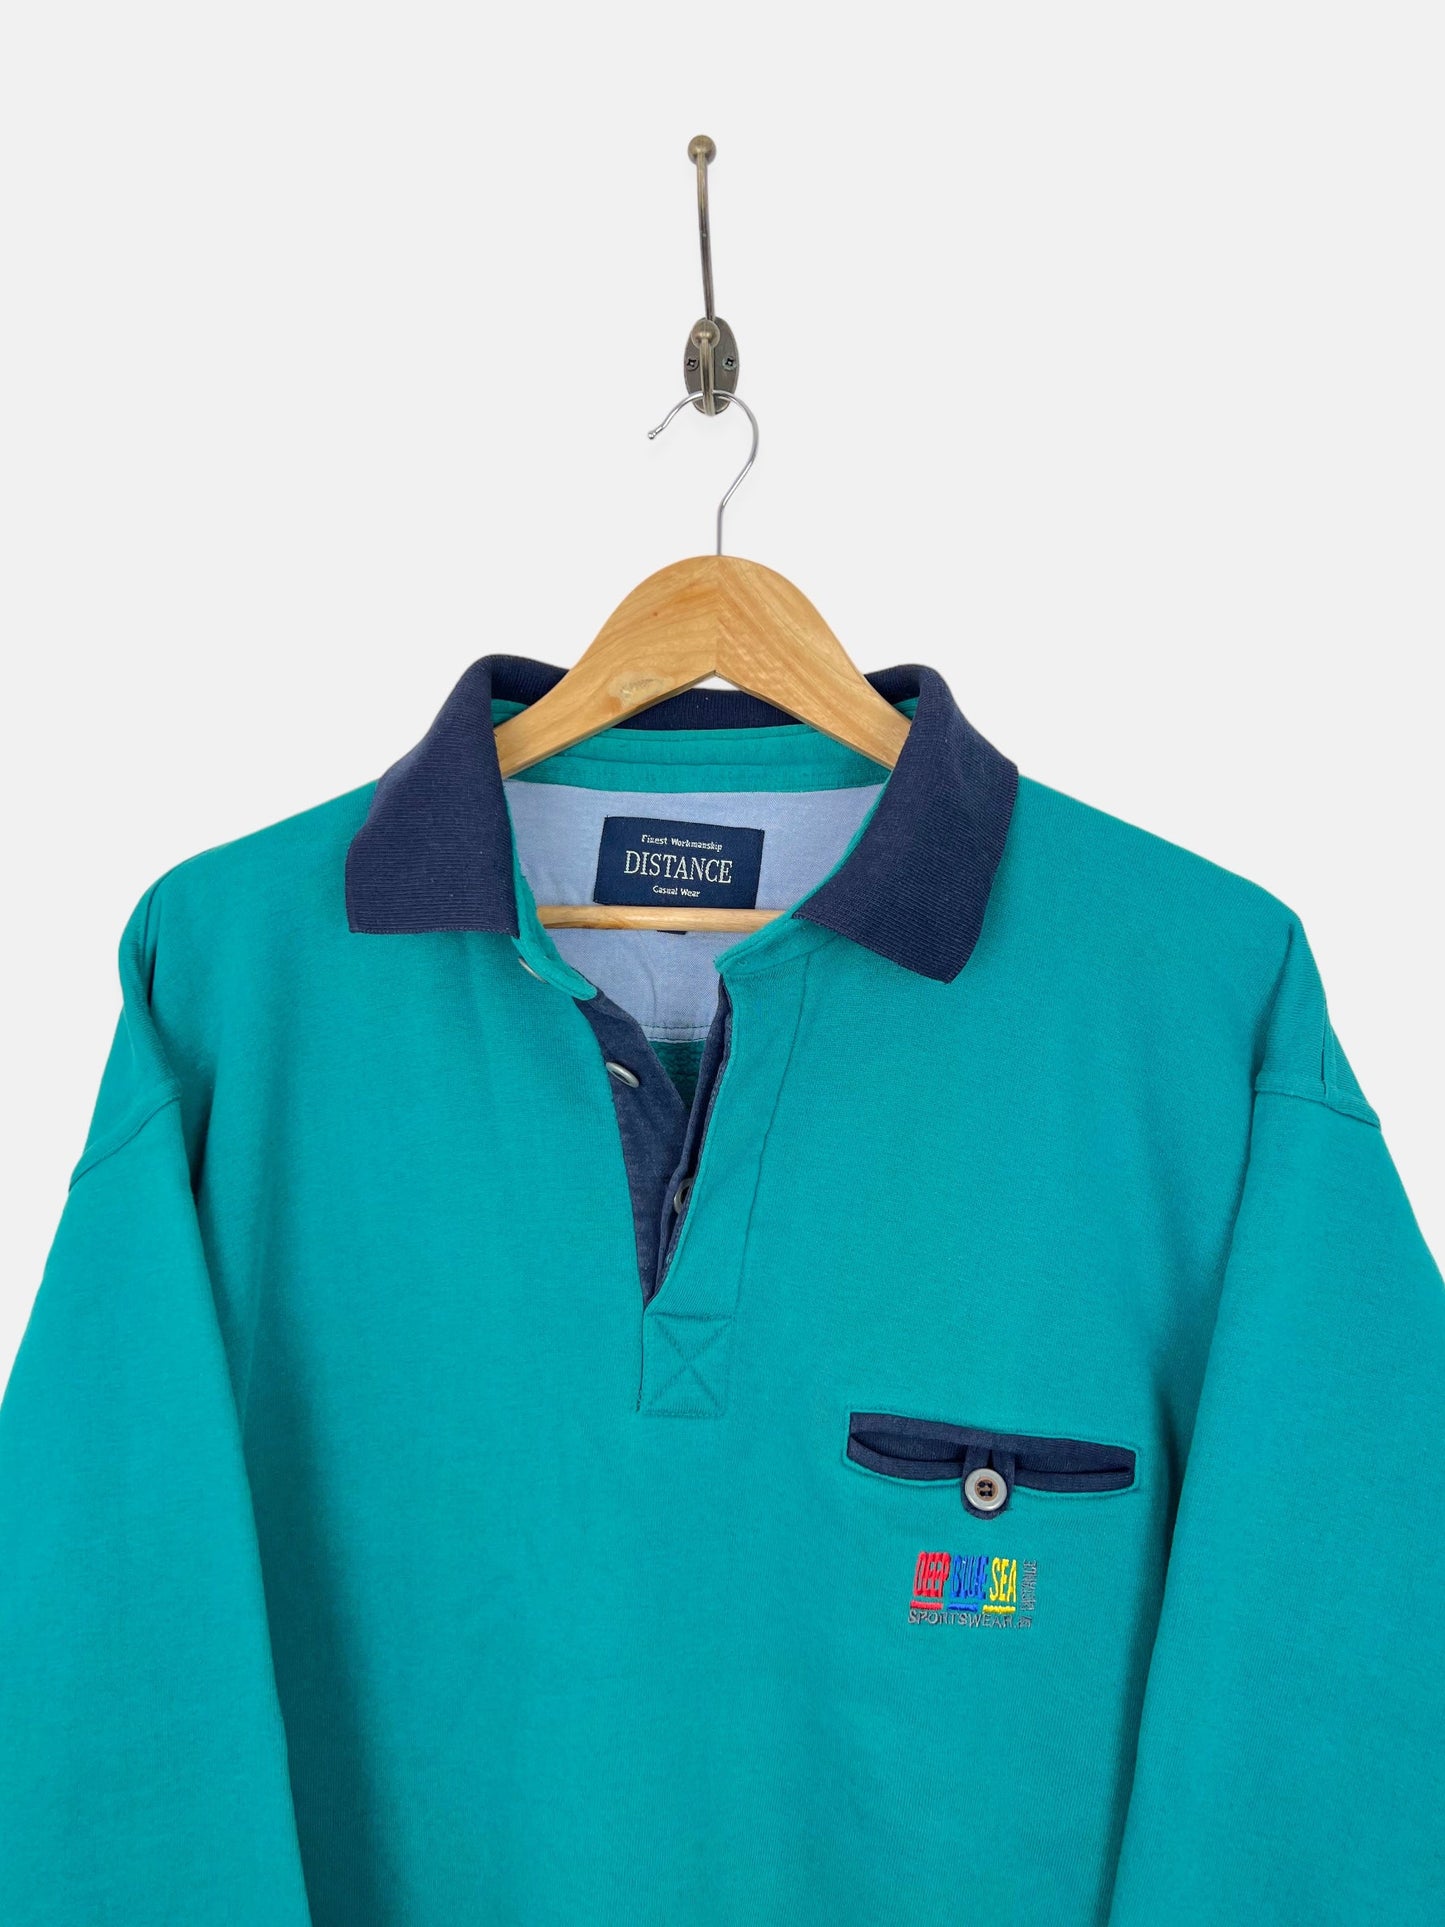 90's Deep Blue Sea Embroidered Vintage Collared Sweatshirt Size M